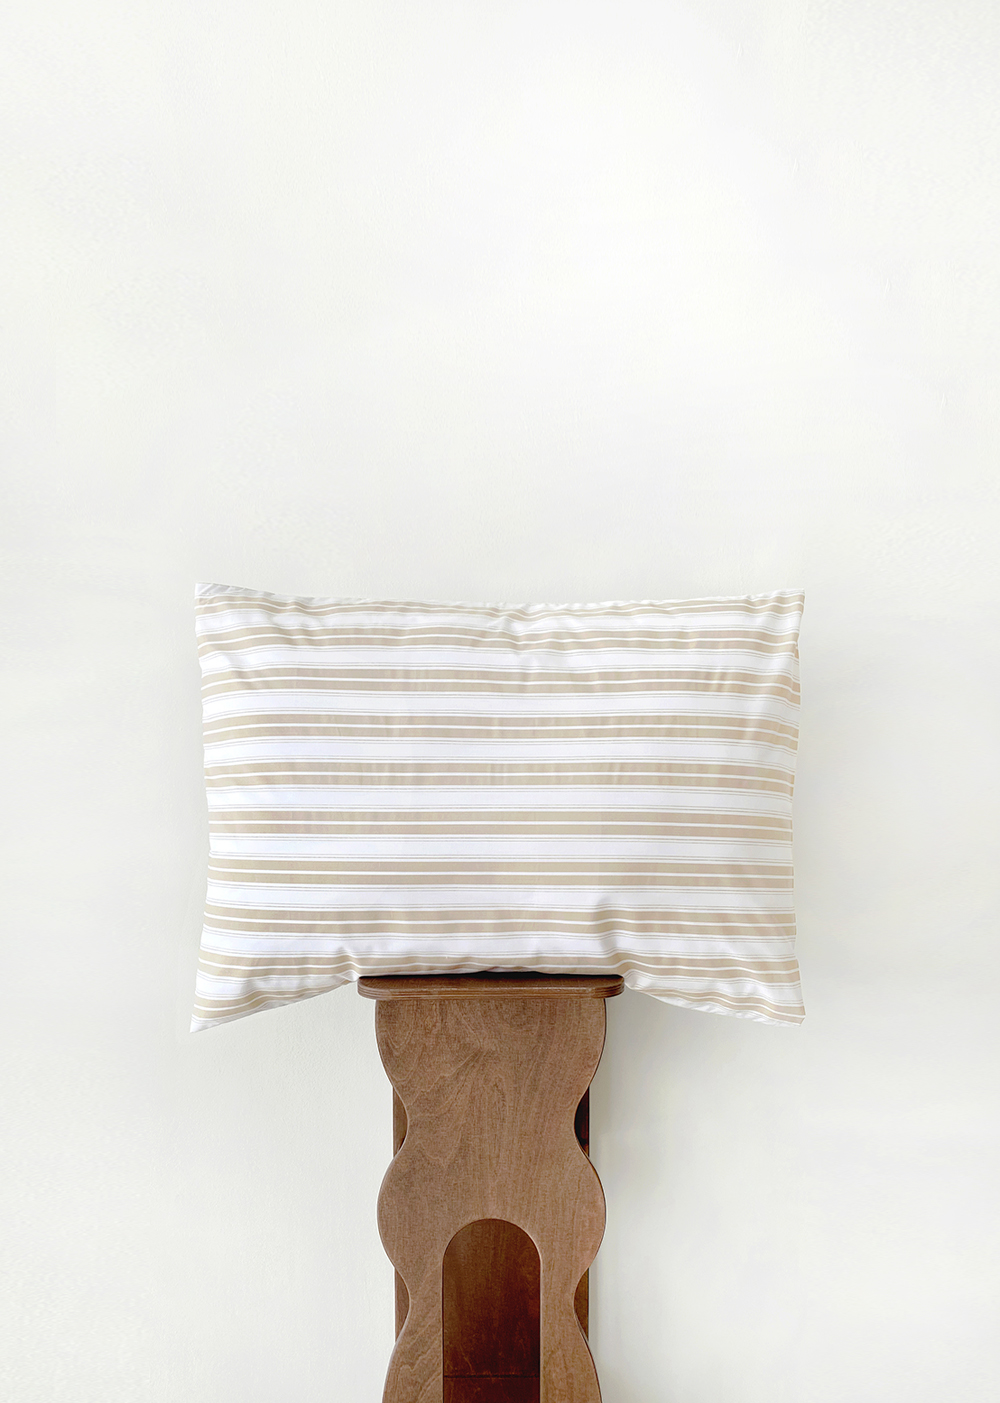 Alternate stripe pillow cover - beige